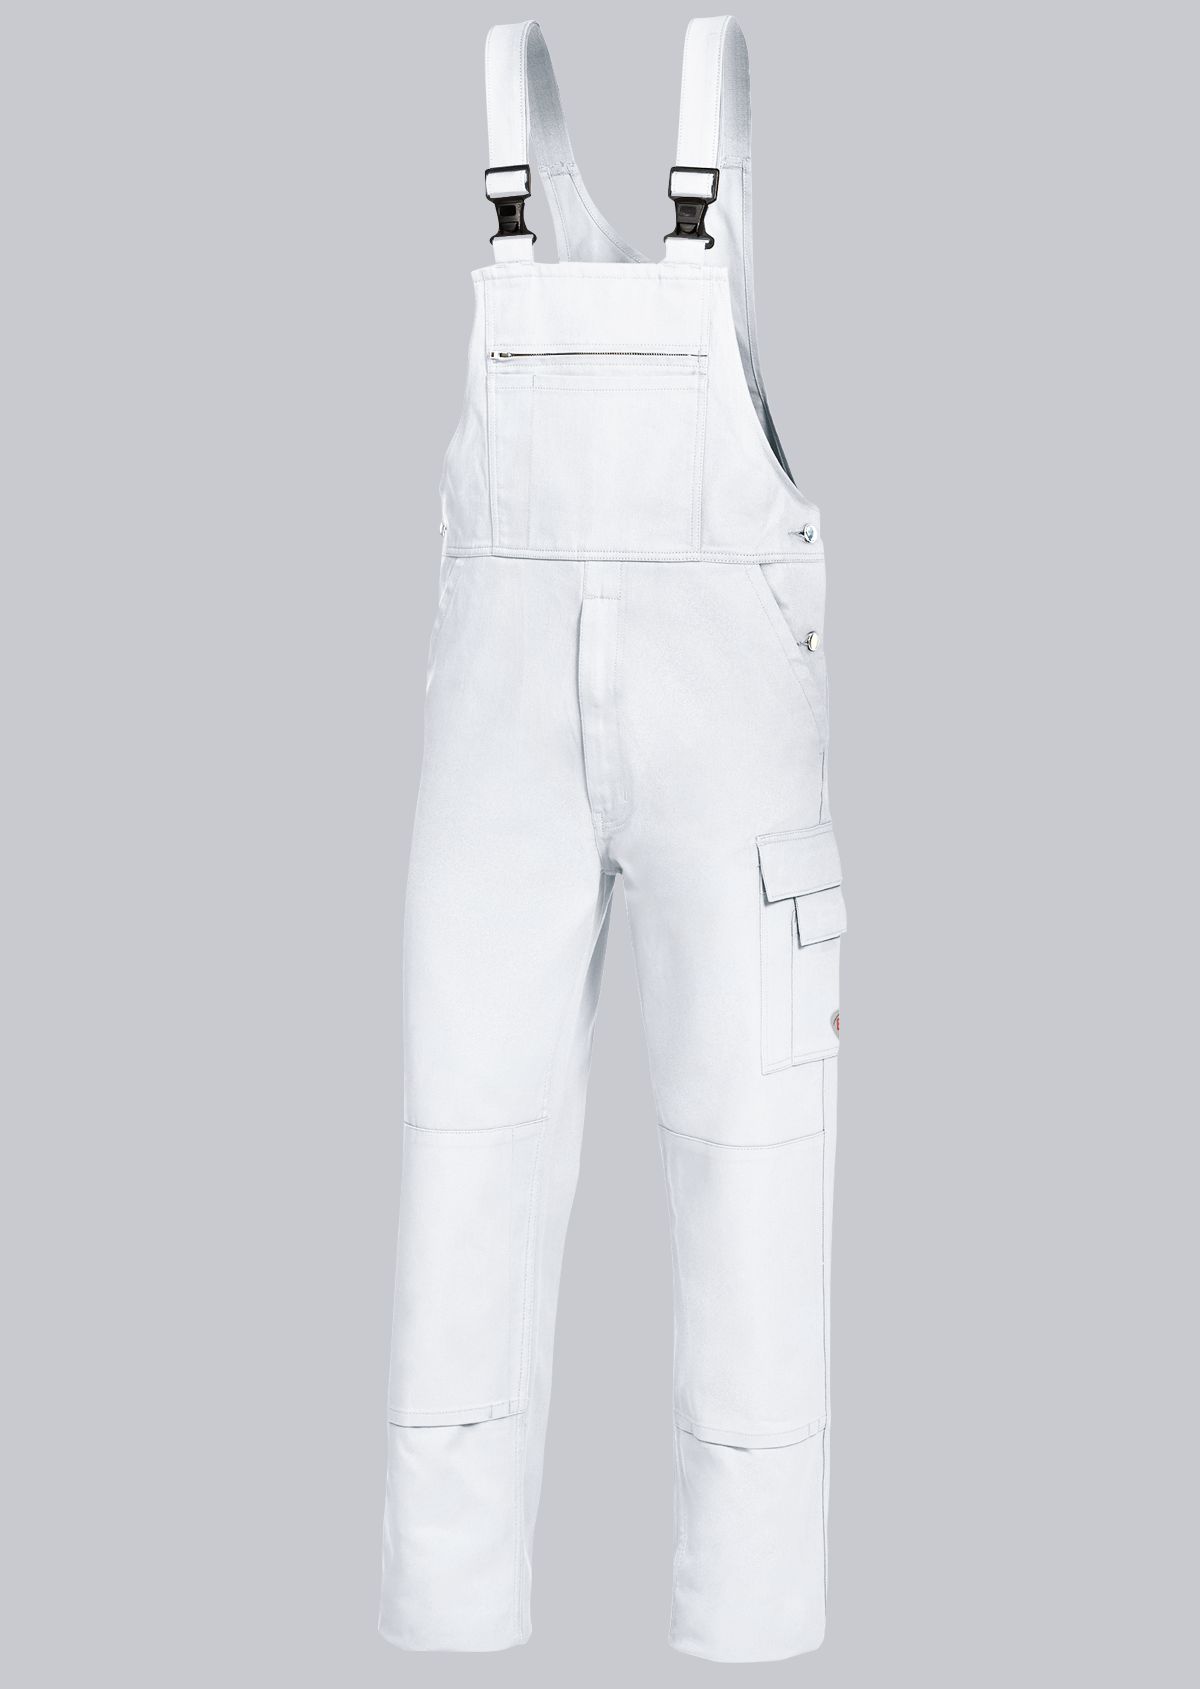 BP® Cotton basic bib & brace with knee pad pockets